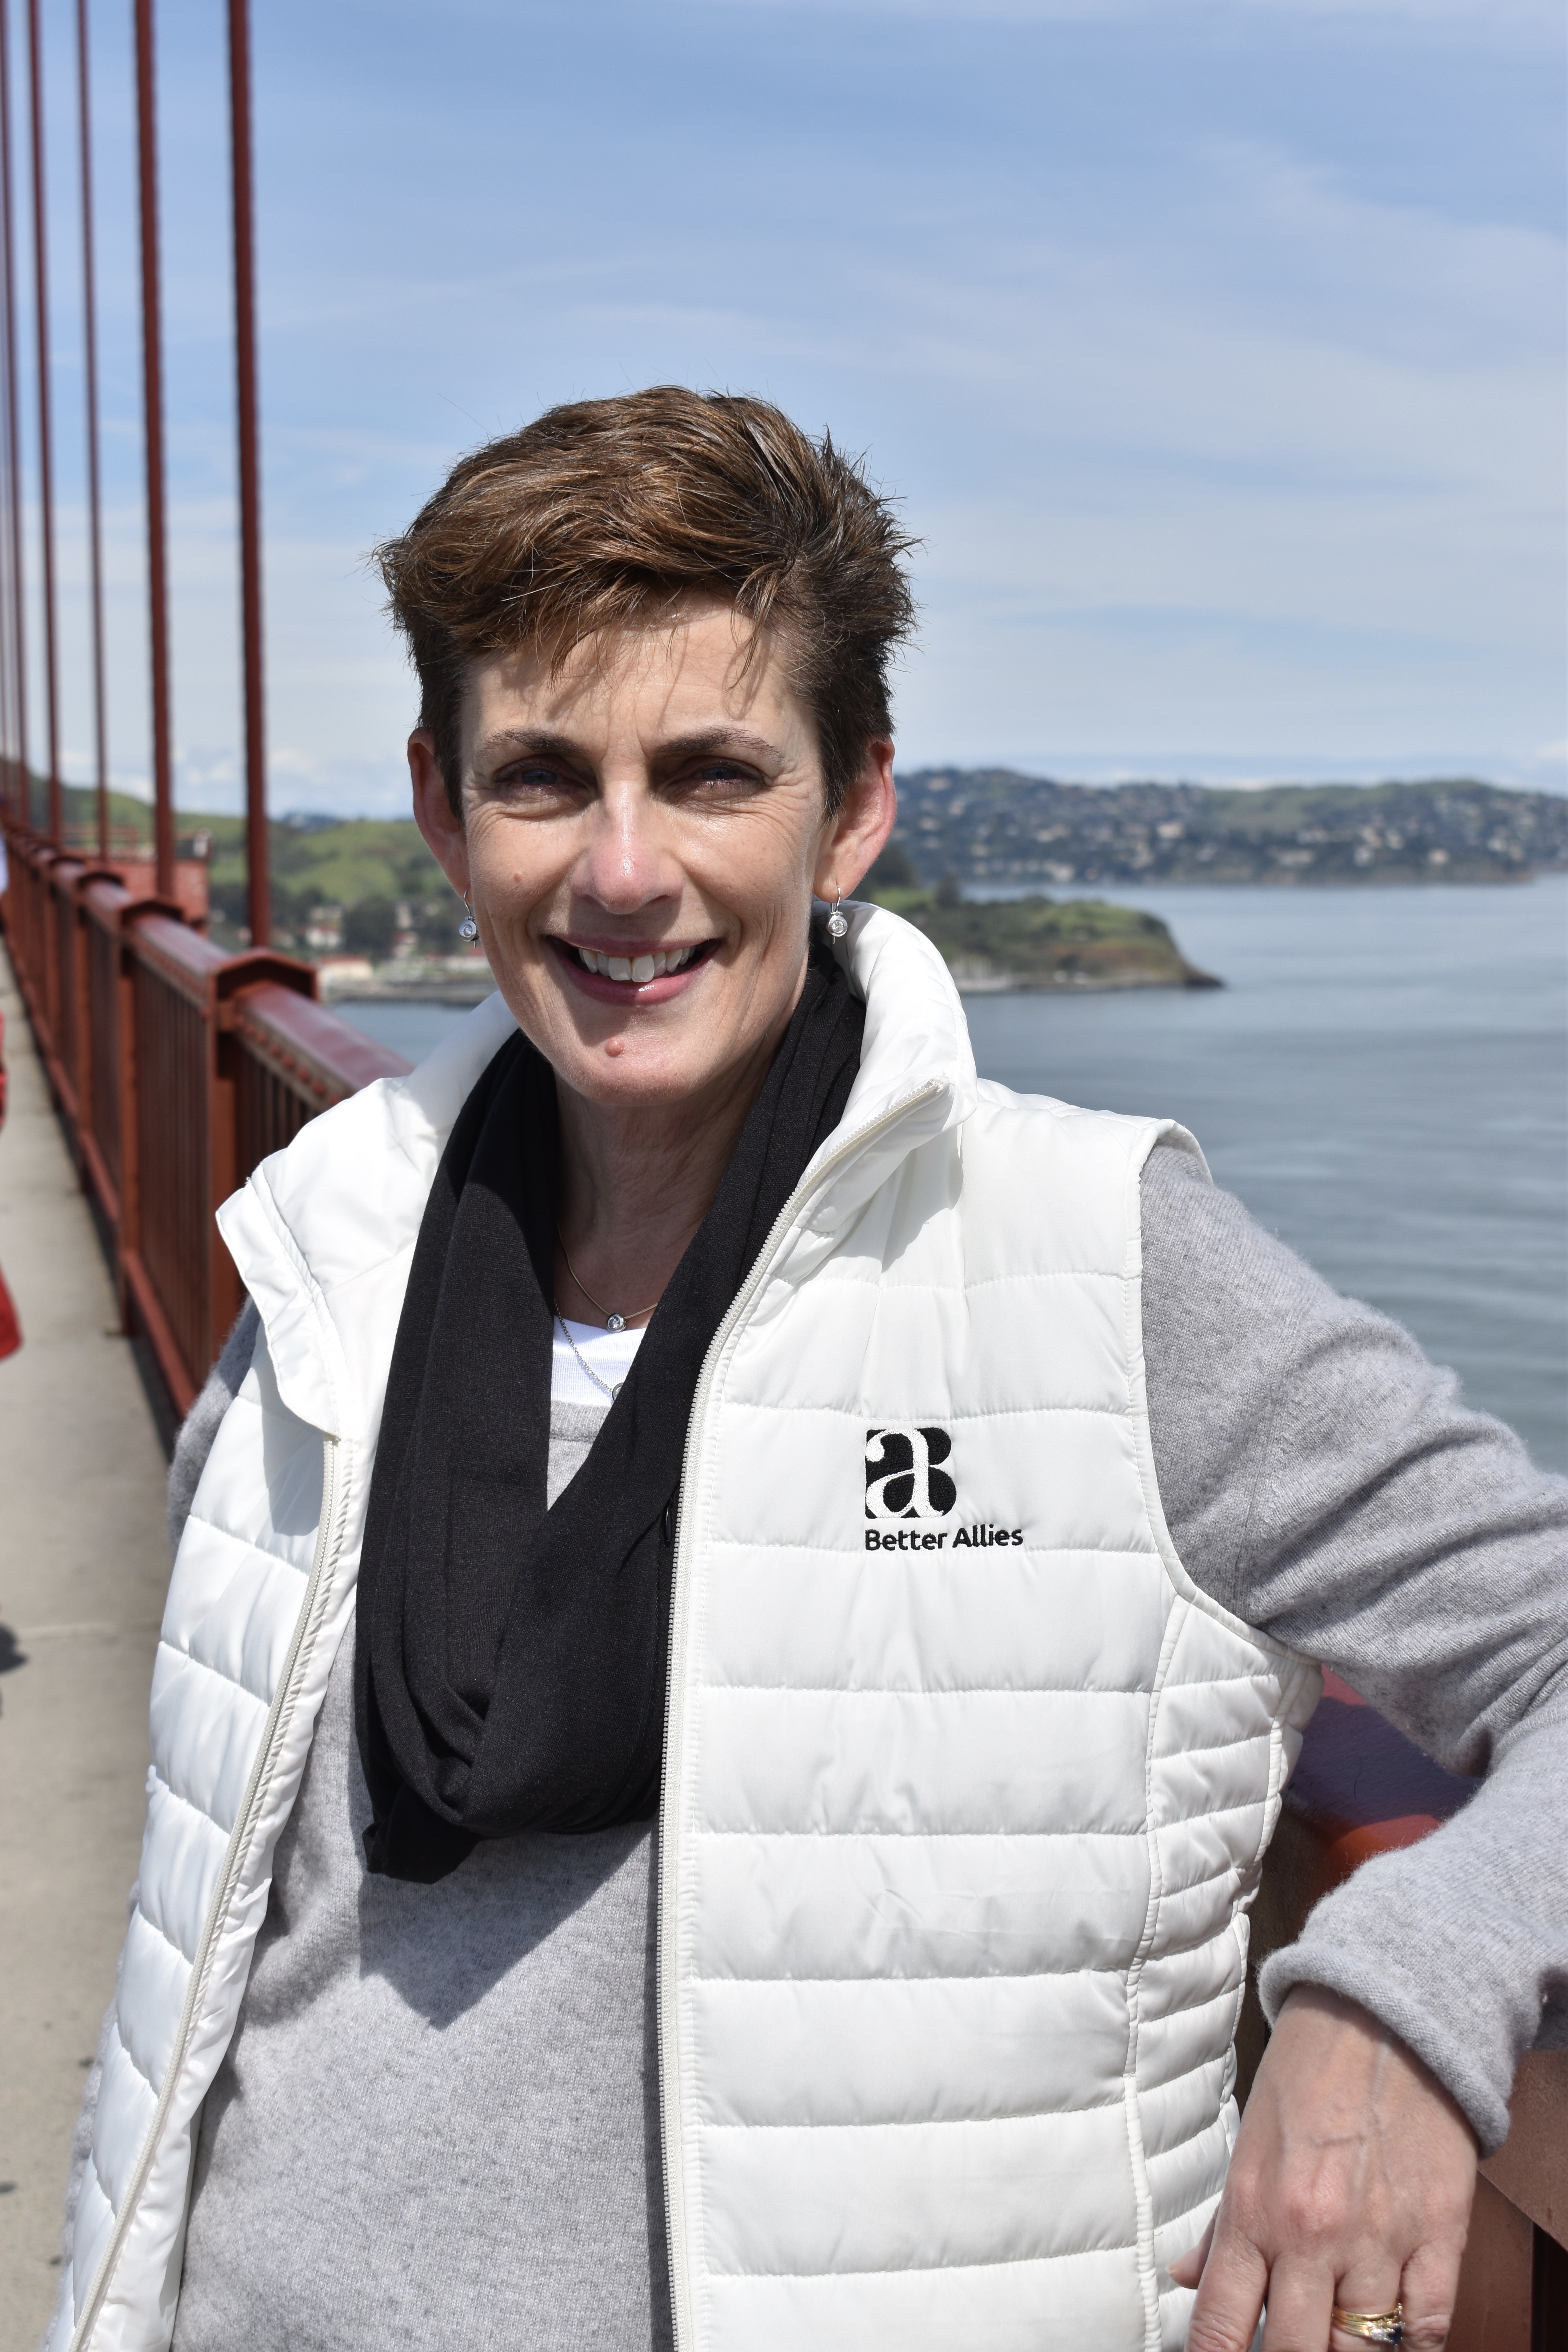 Photo of Karen wearing a Better Allies vest on the Golden Gate Bridge